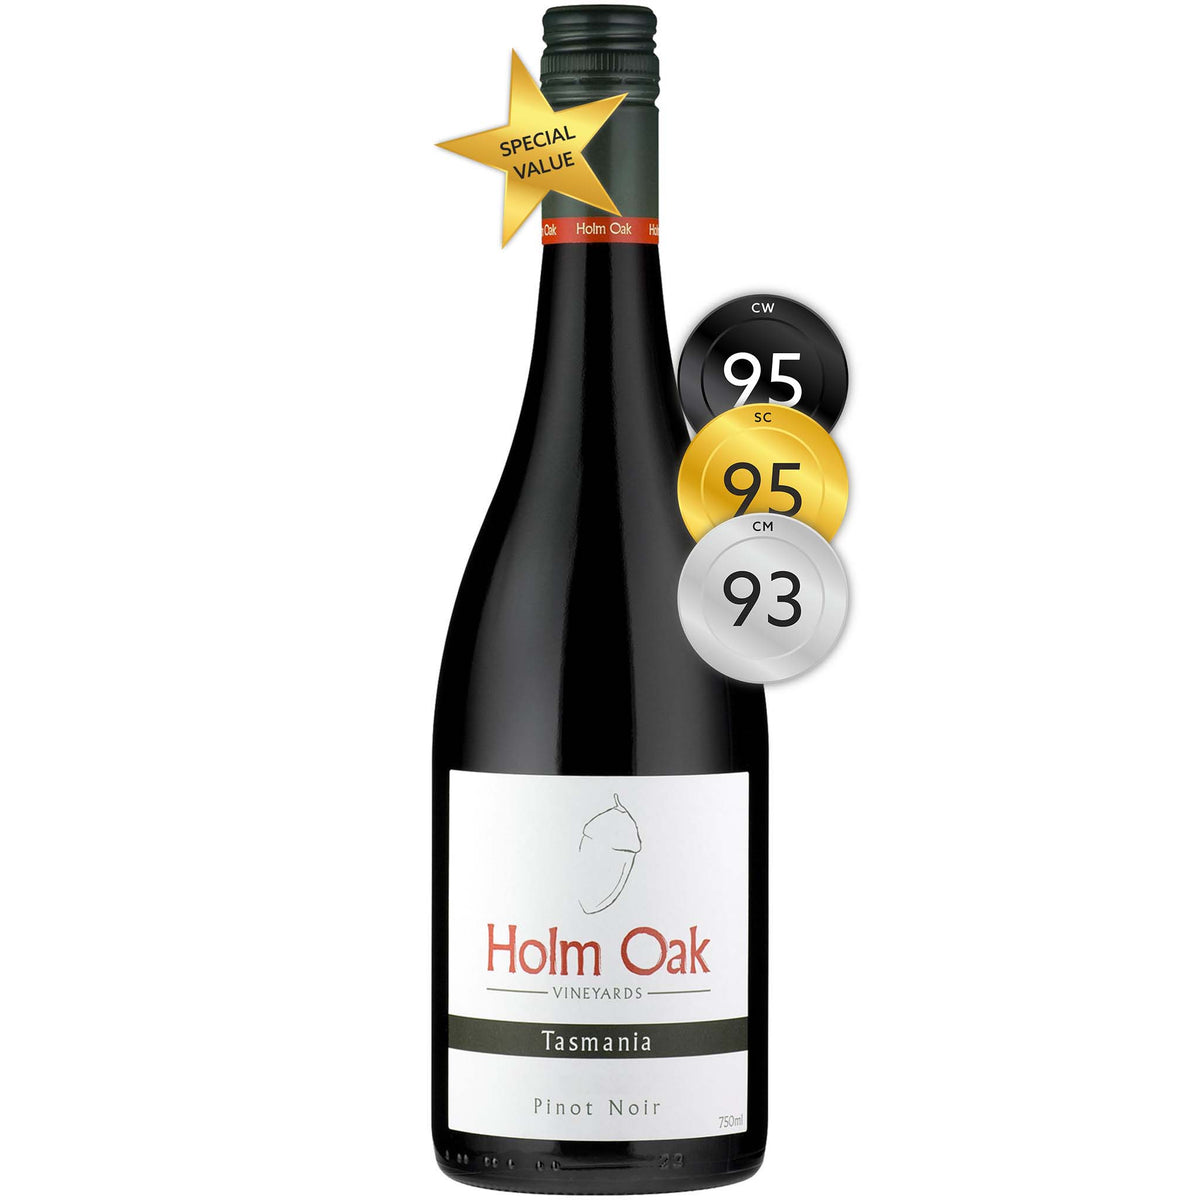 Holm Oak Pinot Noir 2018